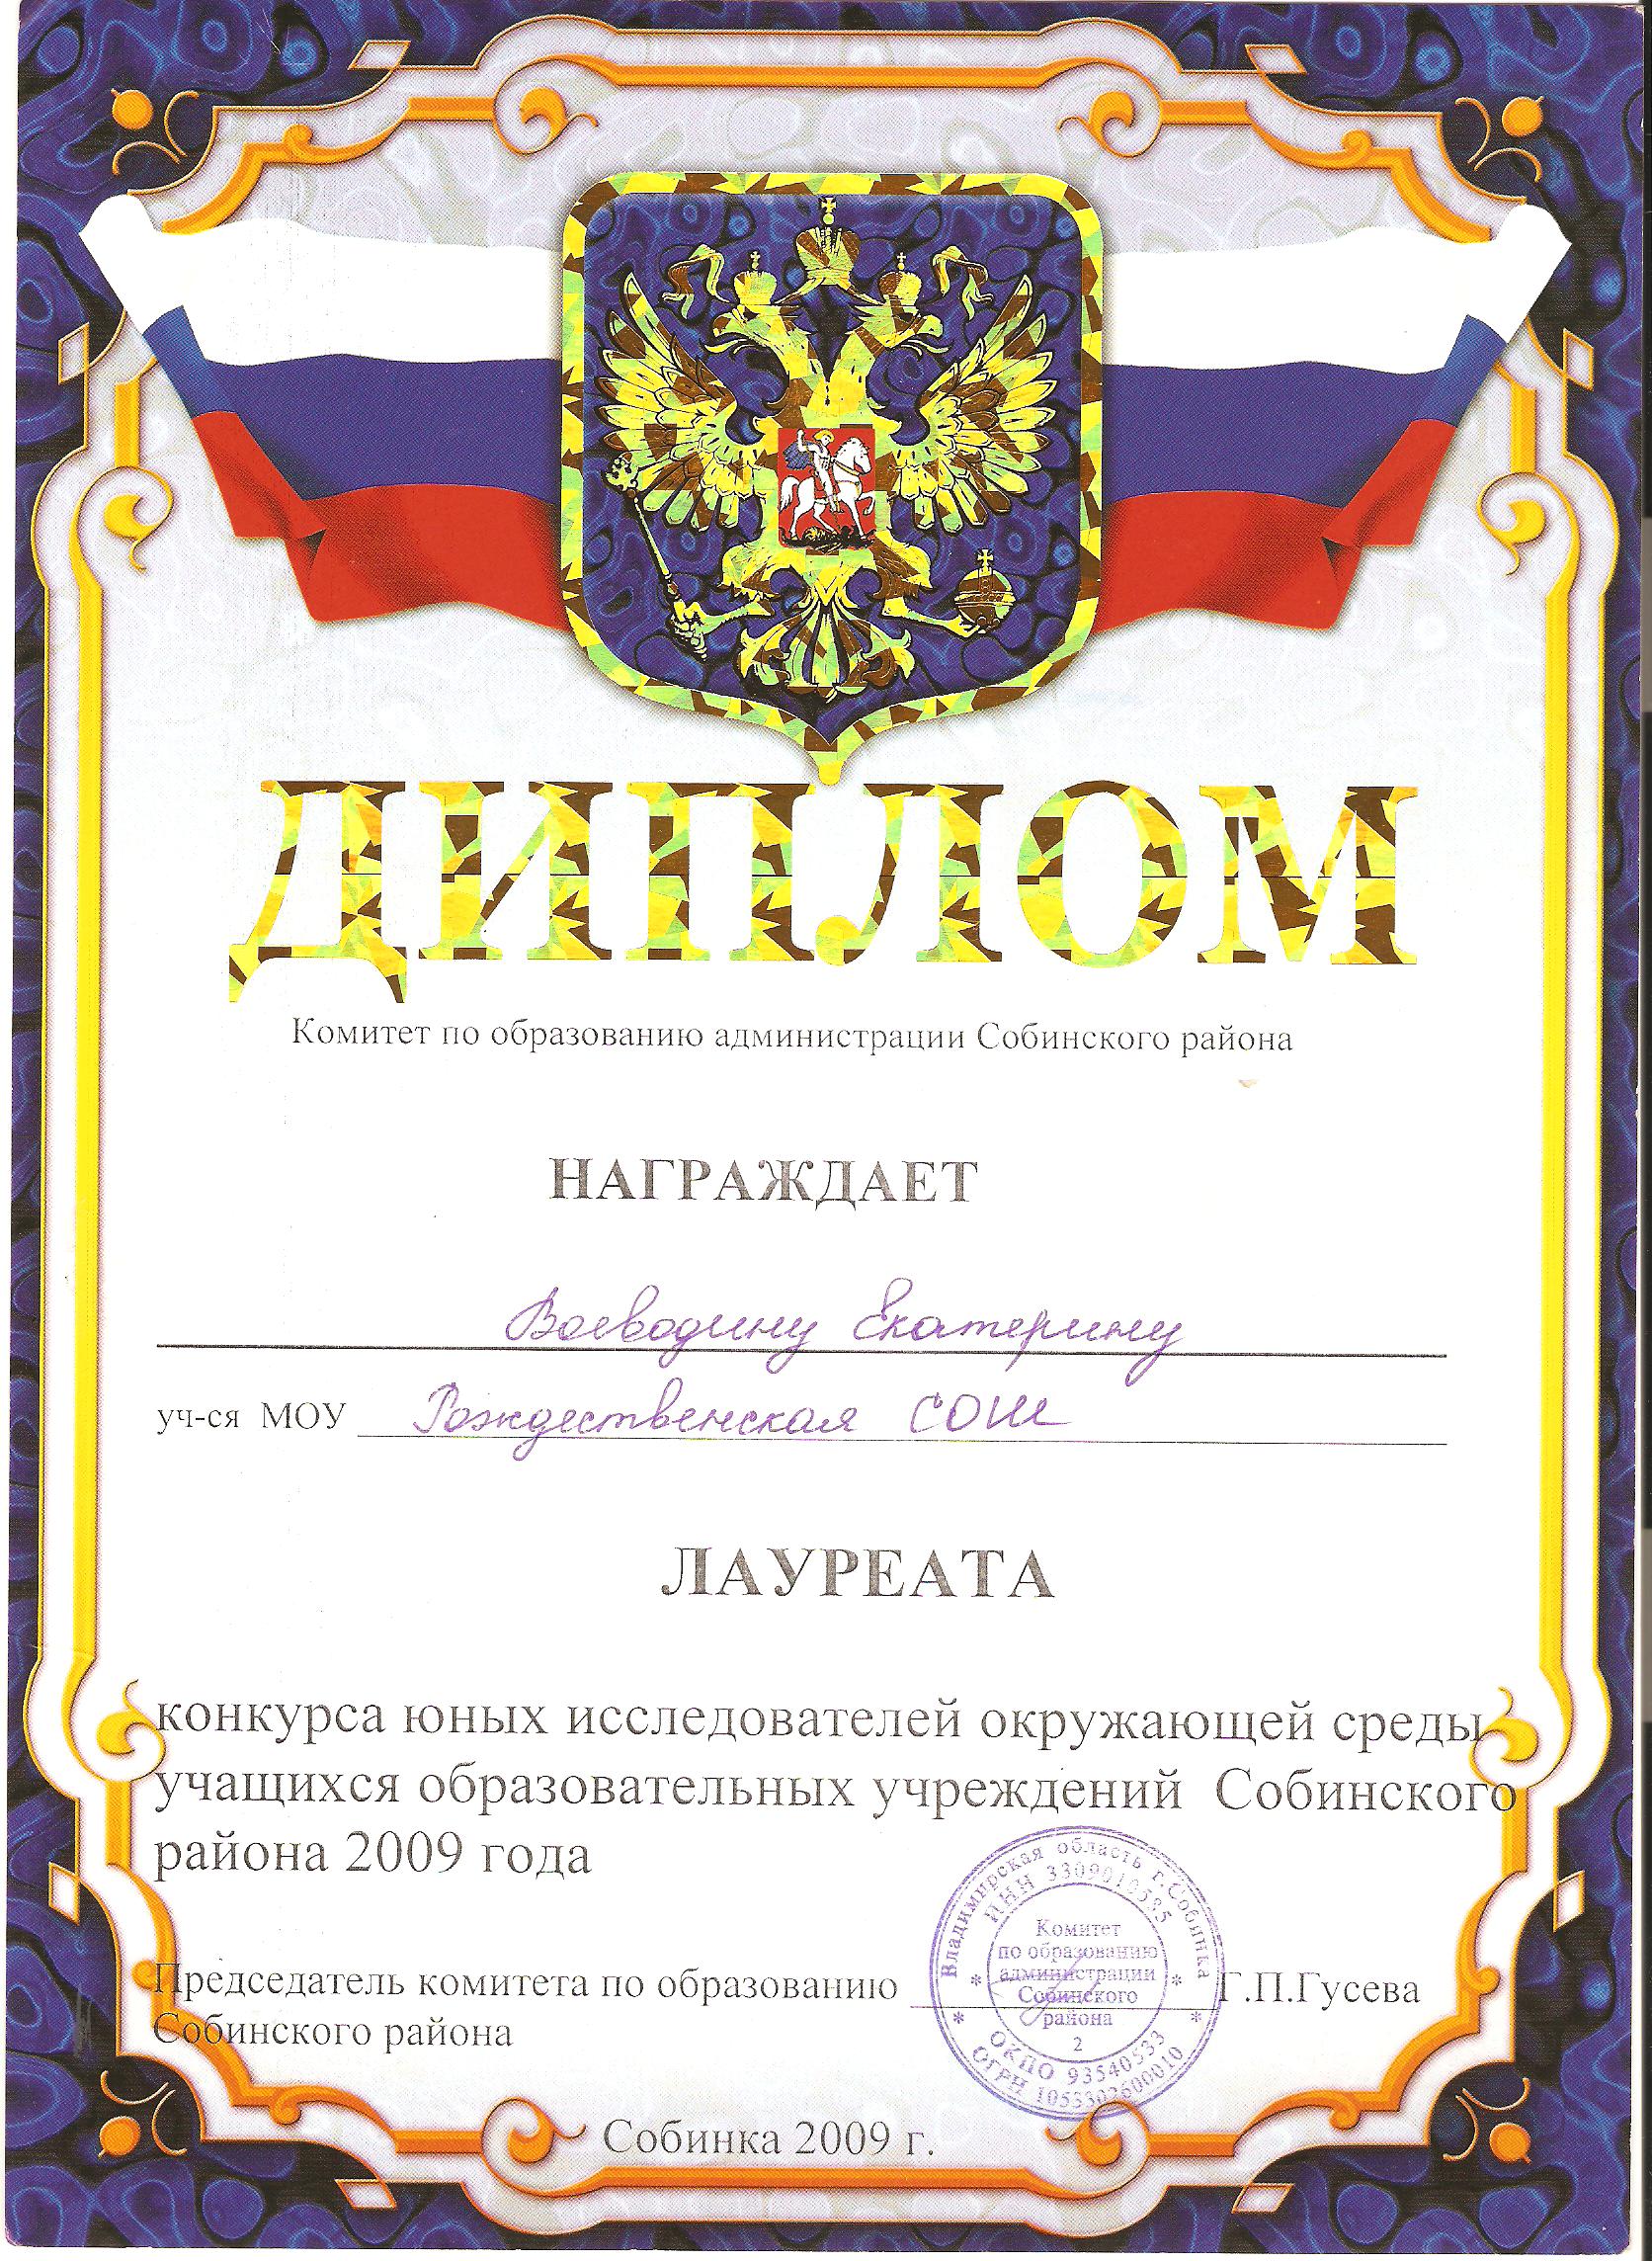  http://roshsob.ucoz.ru/gramoti-uchenik/UIOS/voevodina_k-laureat_ehkol_konkurs_2009.jpg